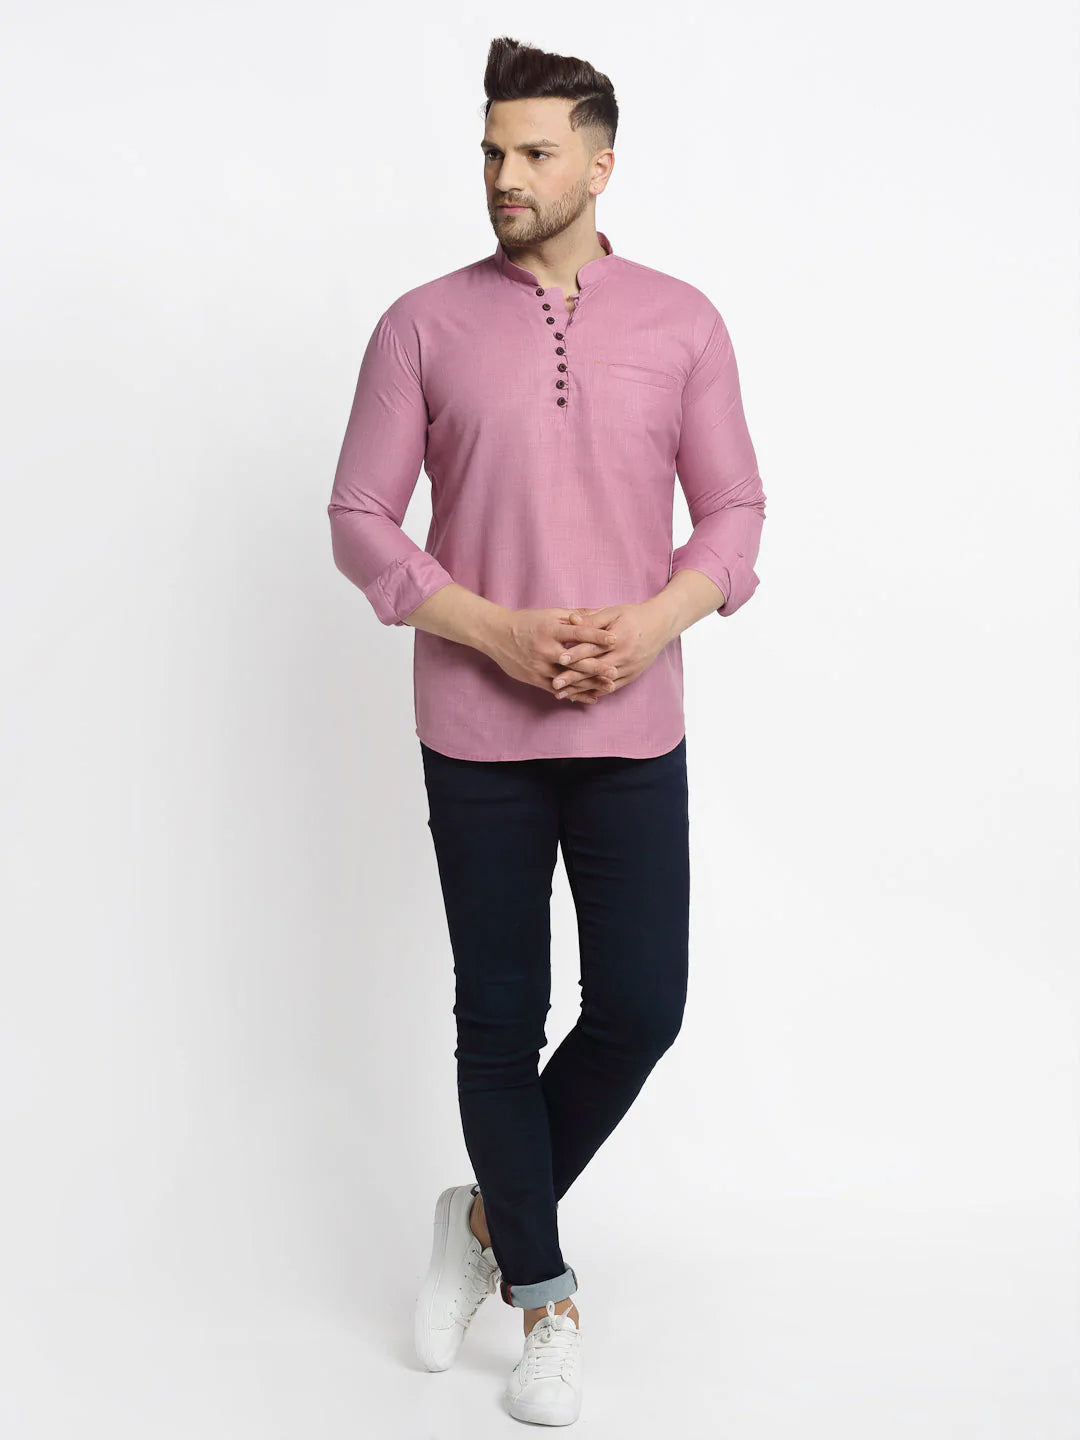 Jompers Men's Magenta Pink Solid Cotton Short Kurta ( KO 639 Magenta )